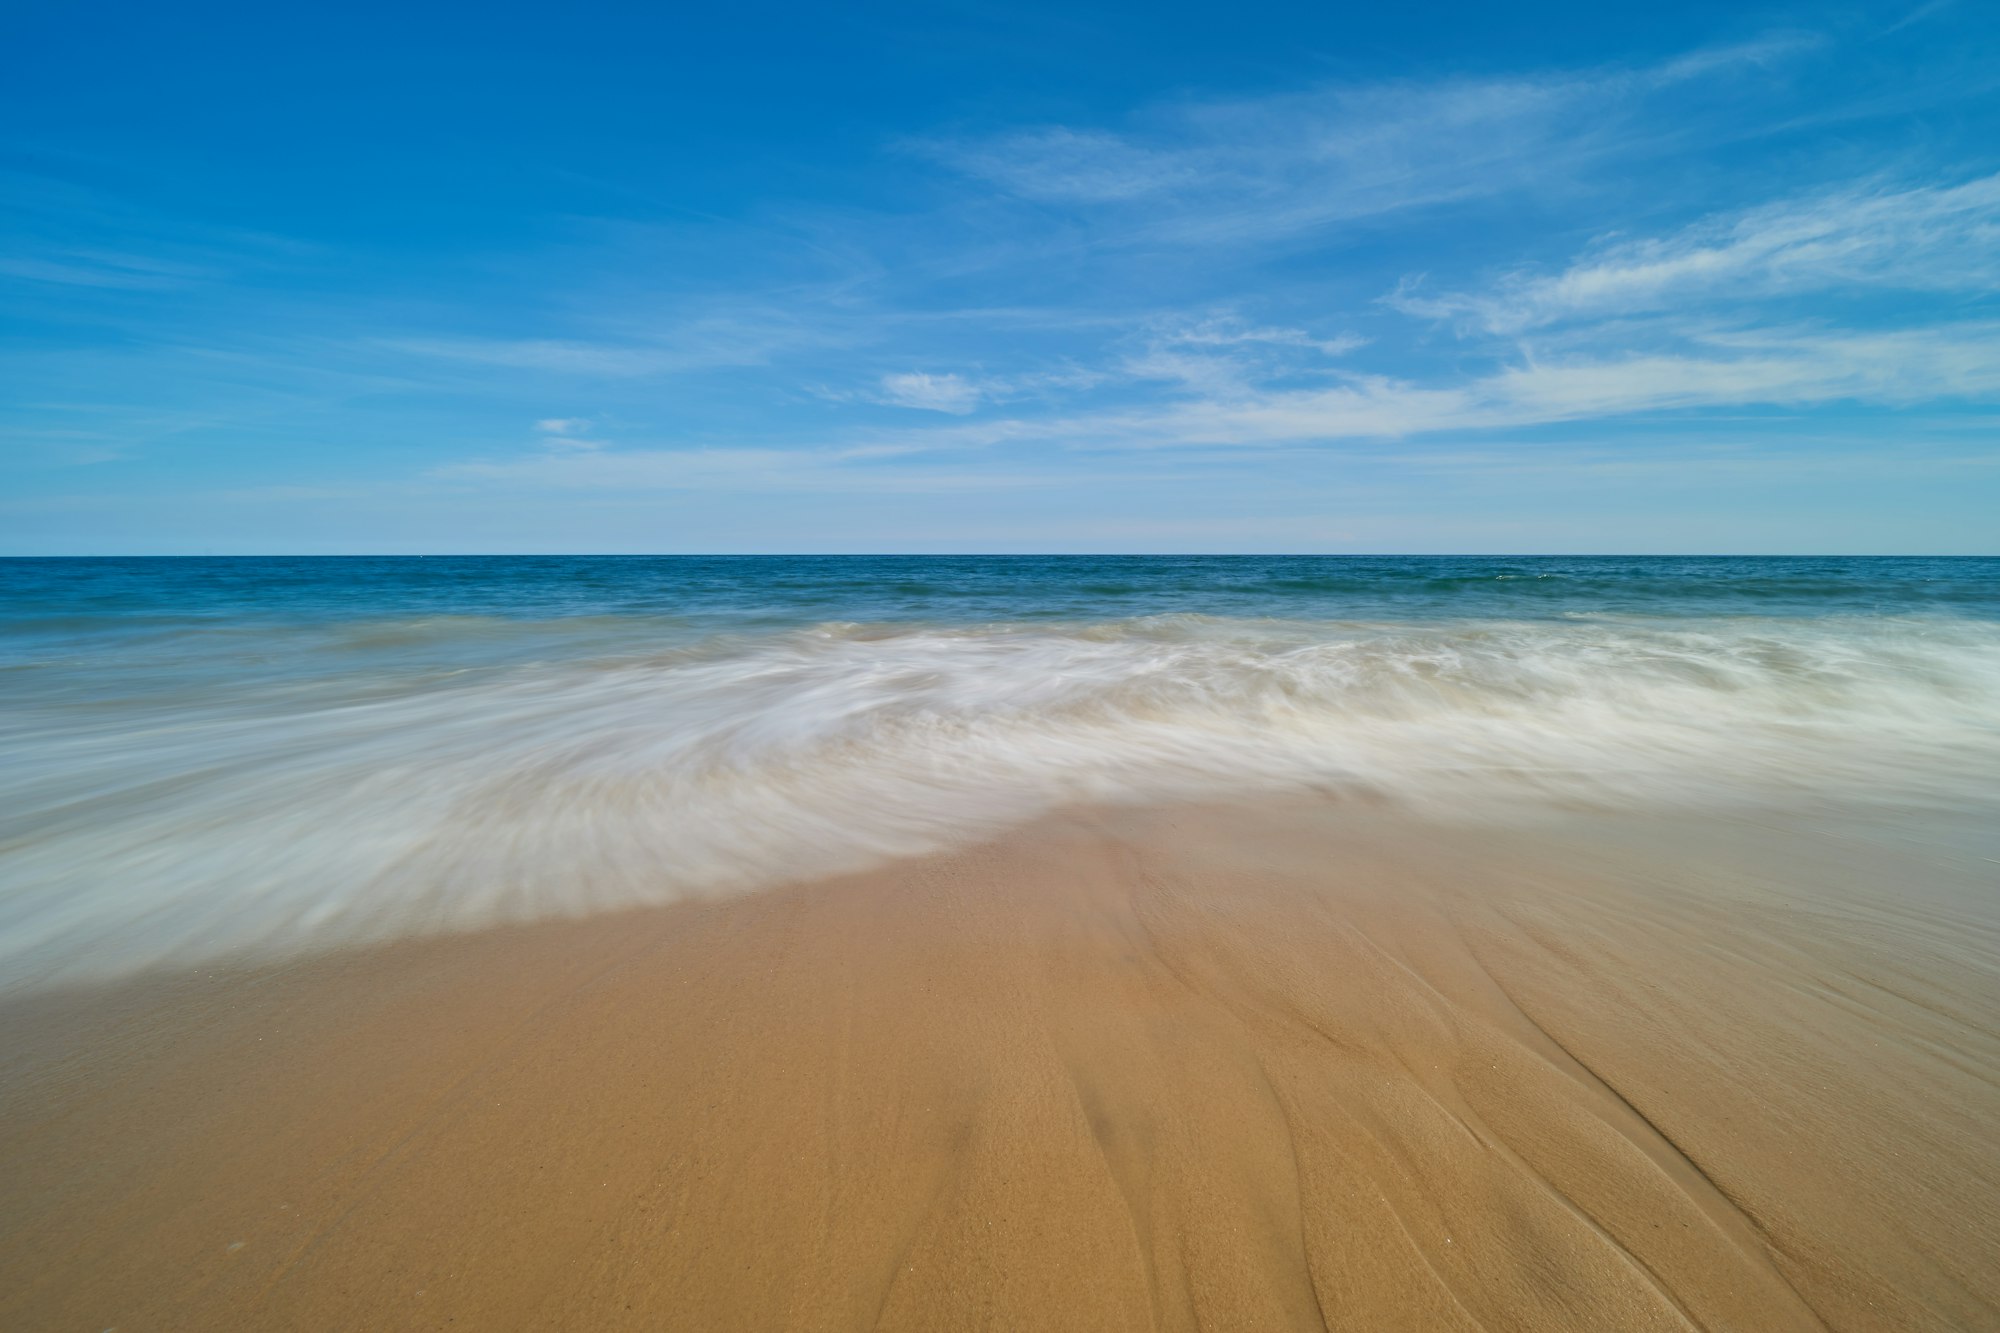 A sandy beach with waves and blue sky